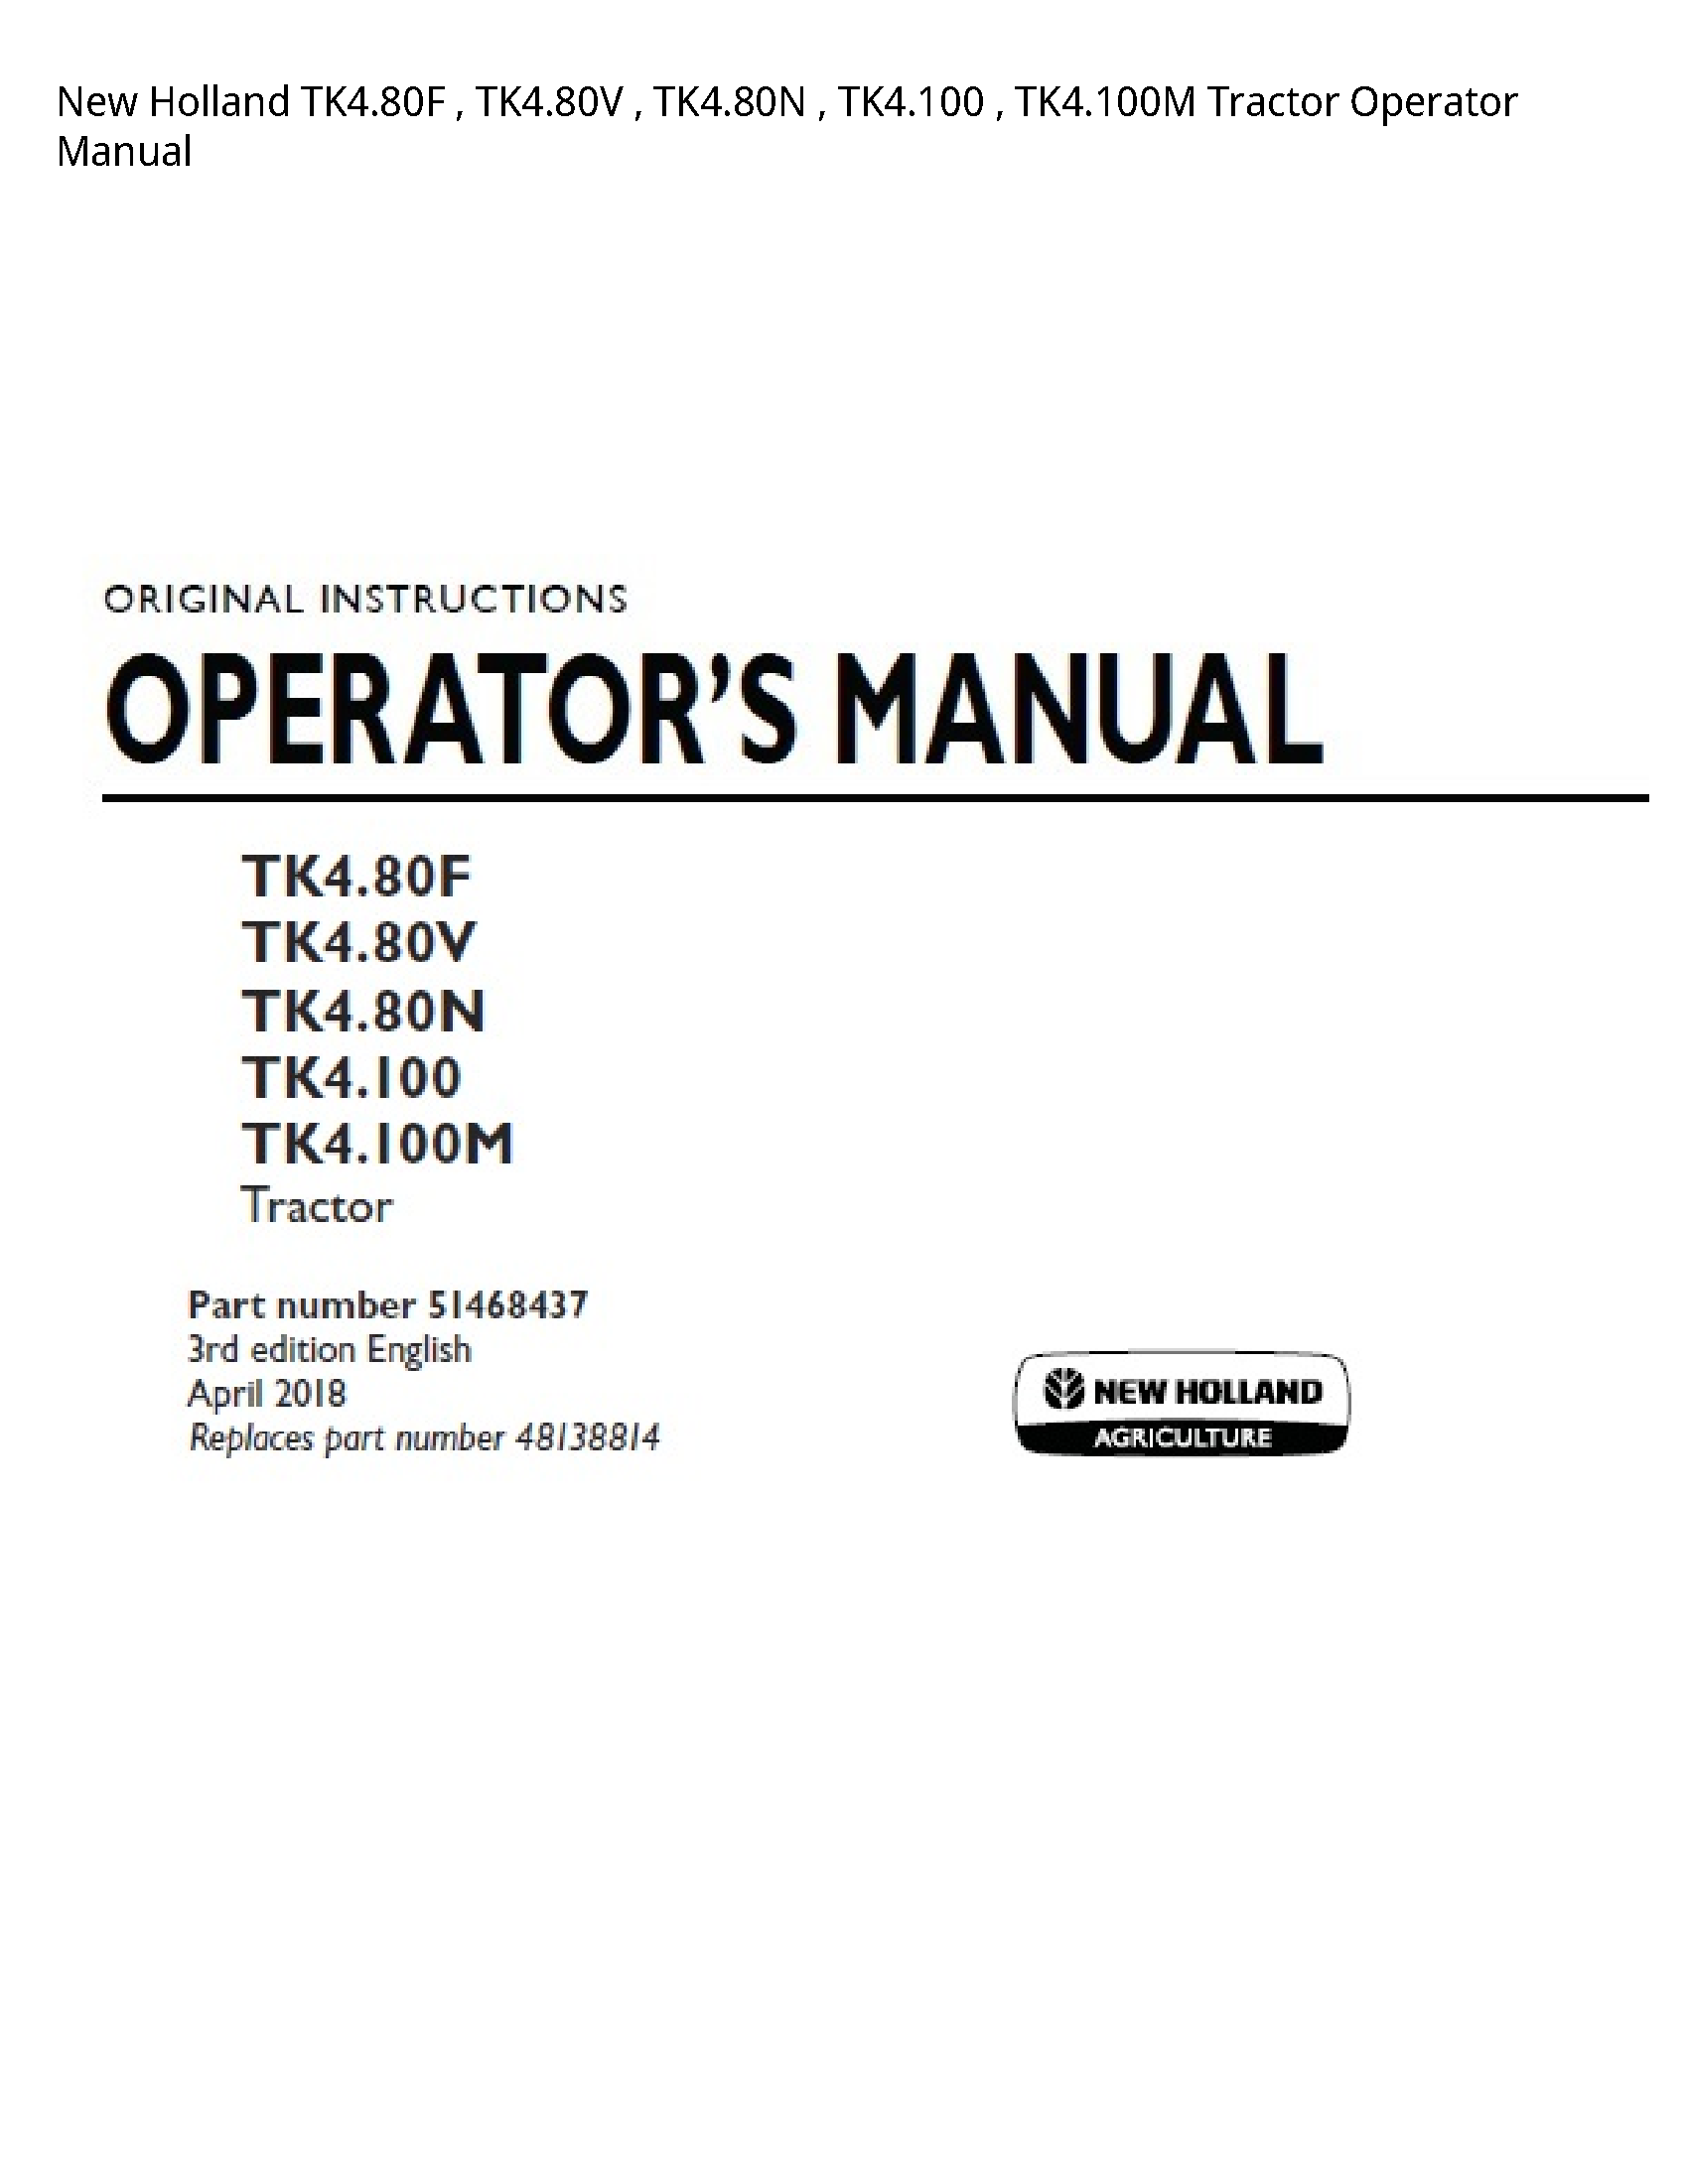 New Holland TK4.80F Tractor Operator manual